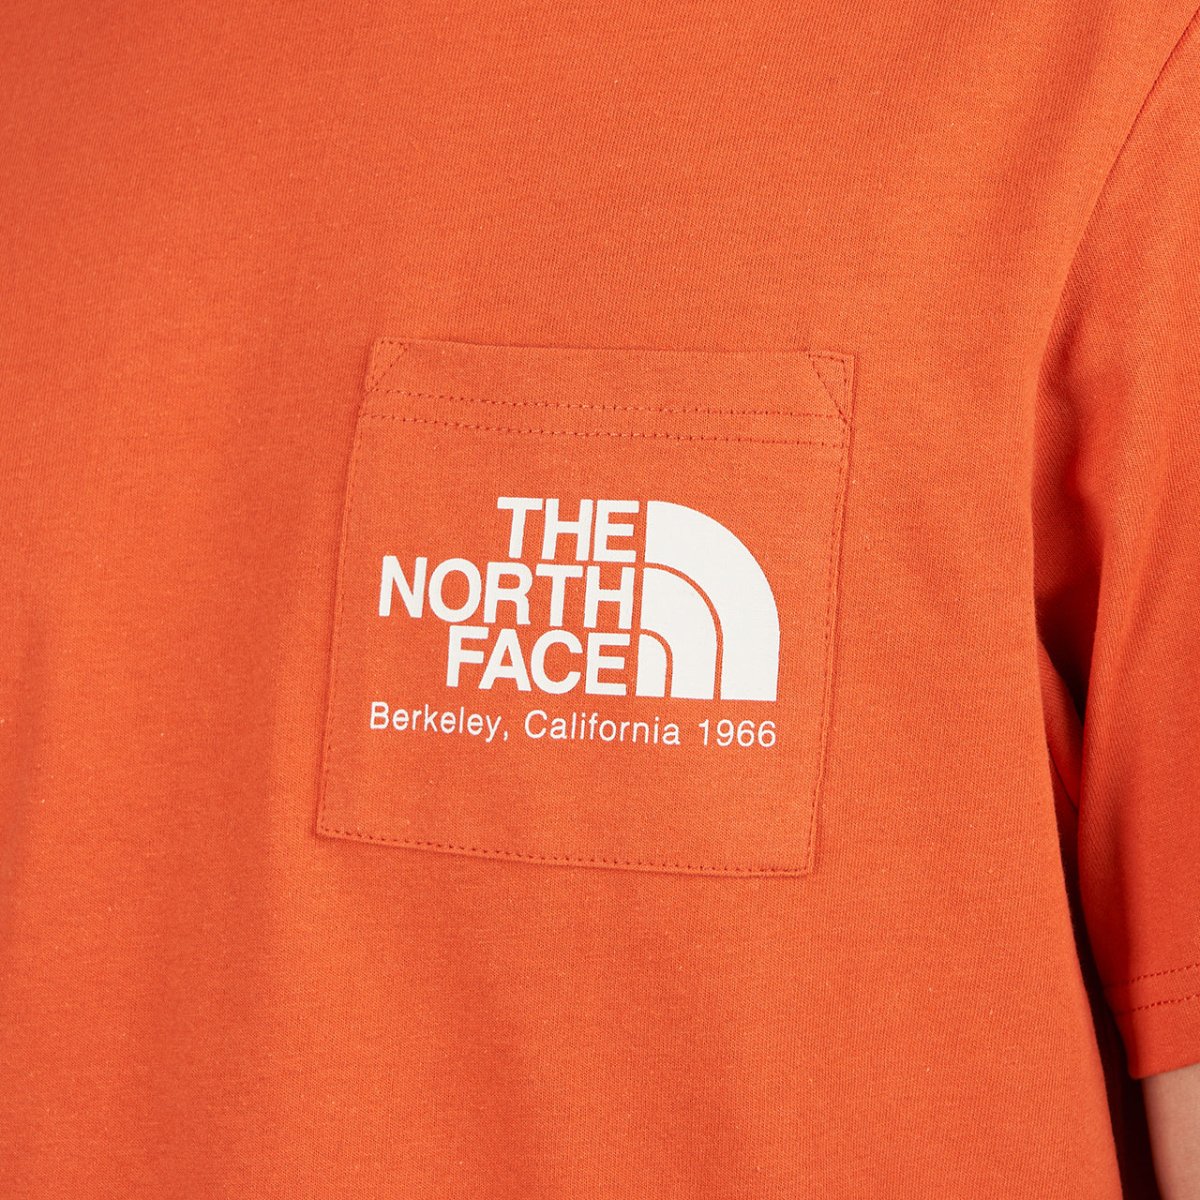 The North Face Berkeley California Pocket Tee (Orange)  - Allike Store